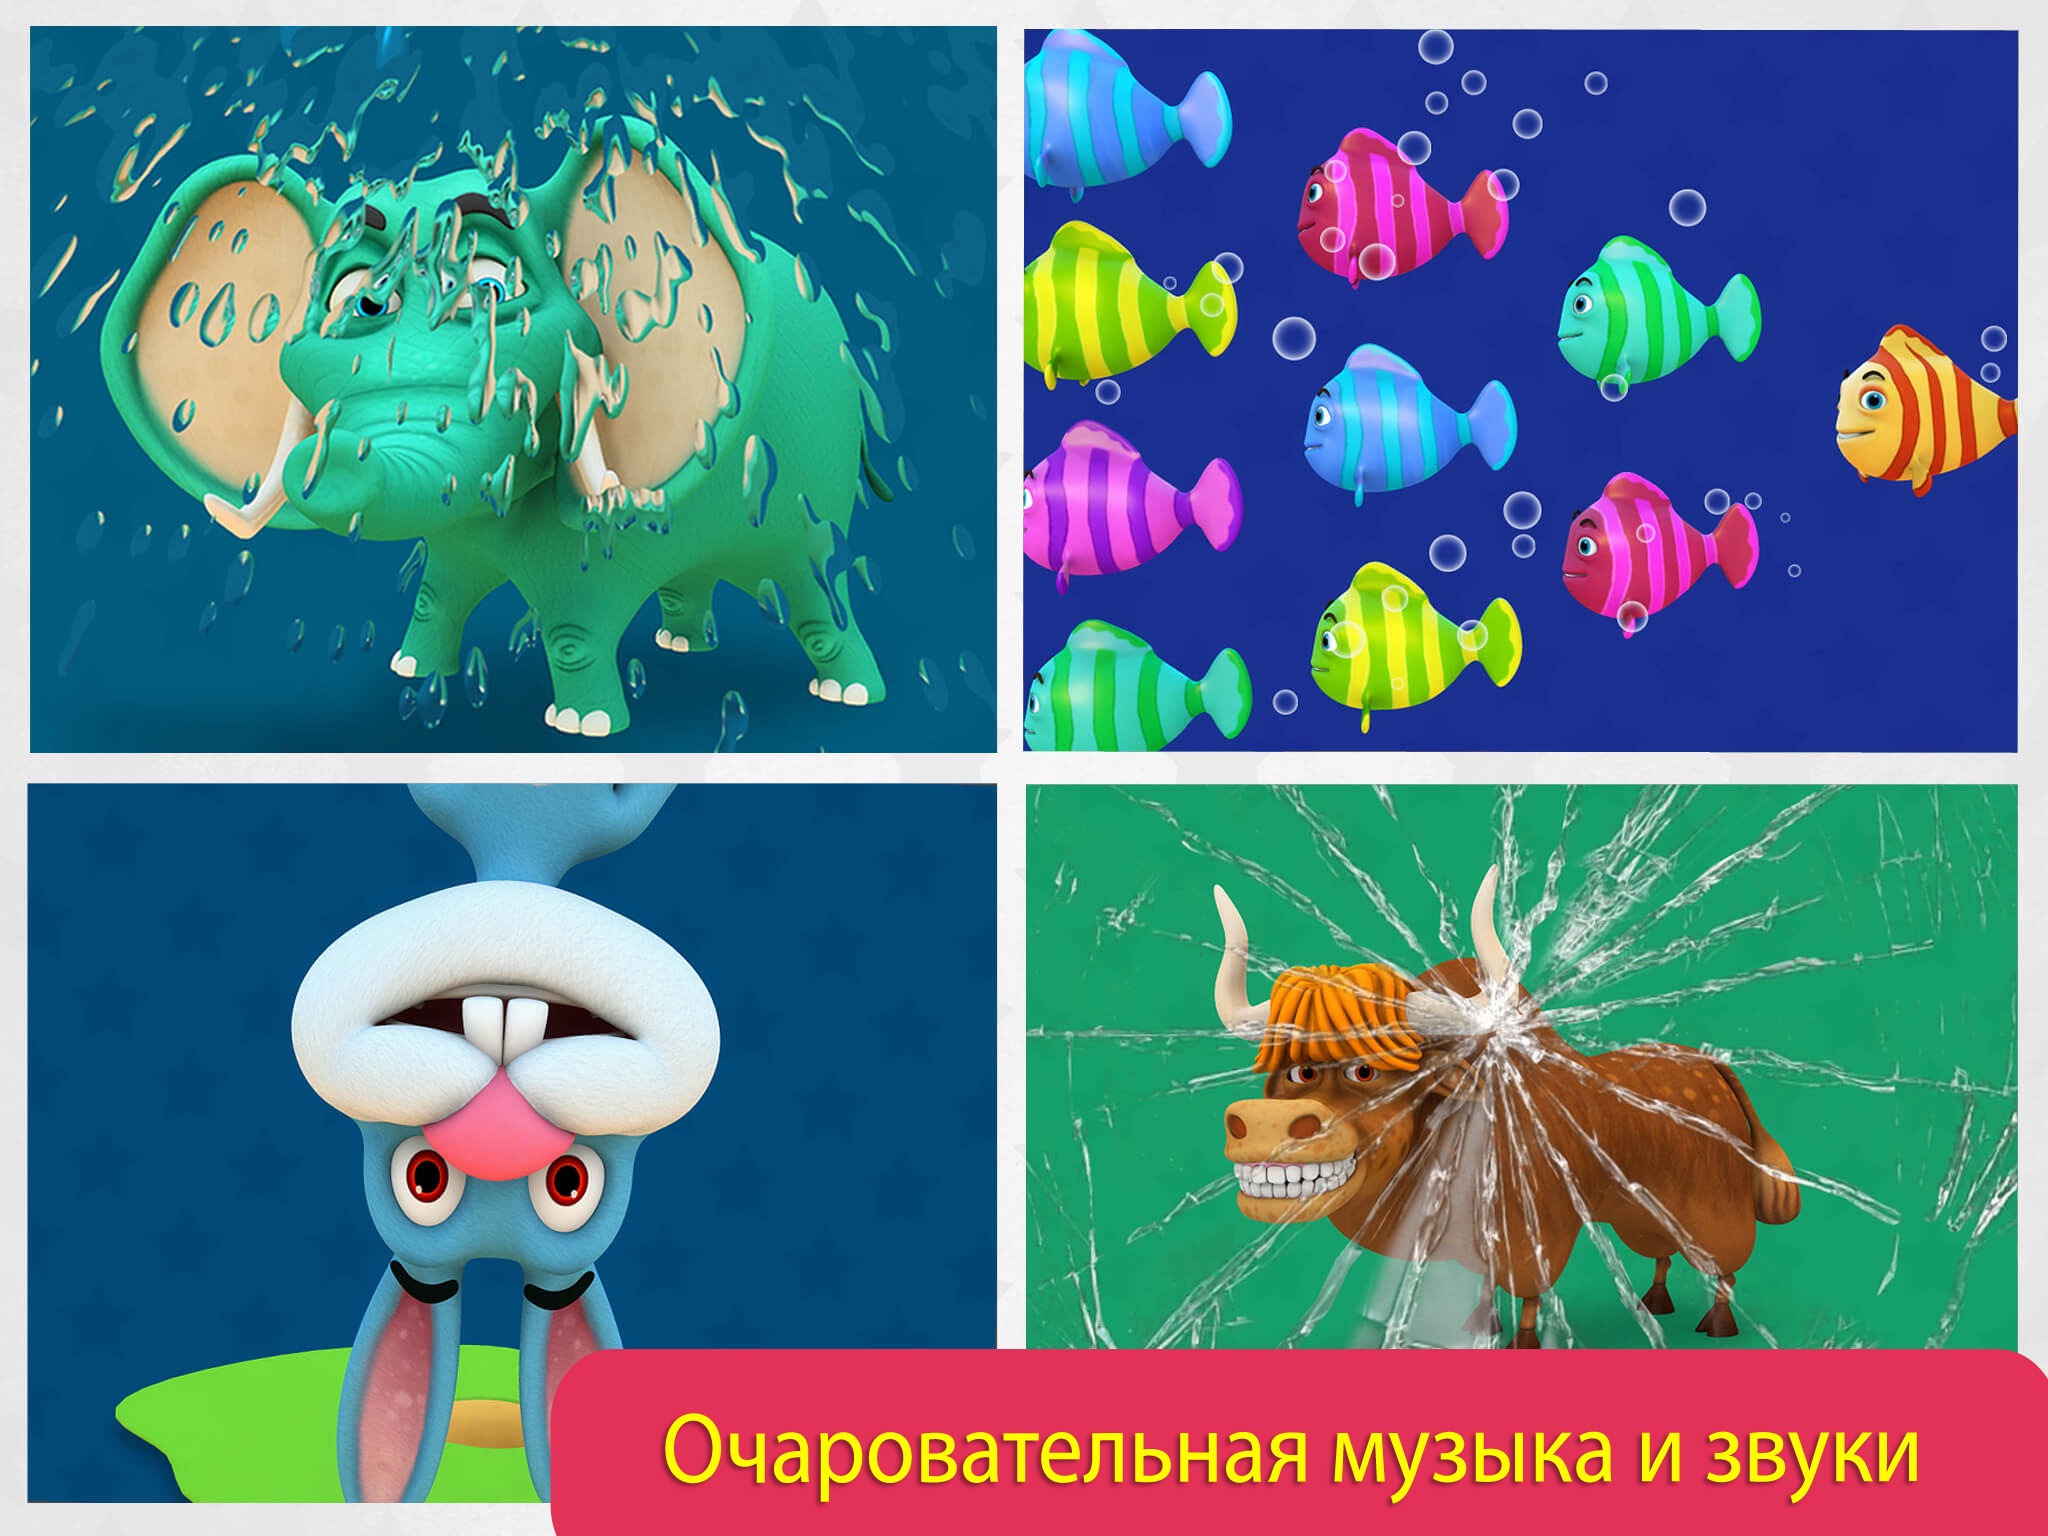 Gigglymals - Funny Interactive Animals for iPad screenshot 2